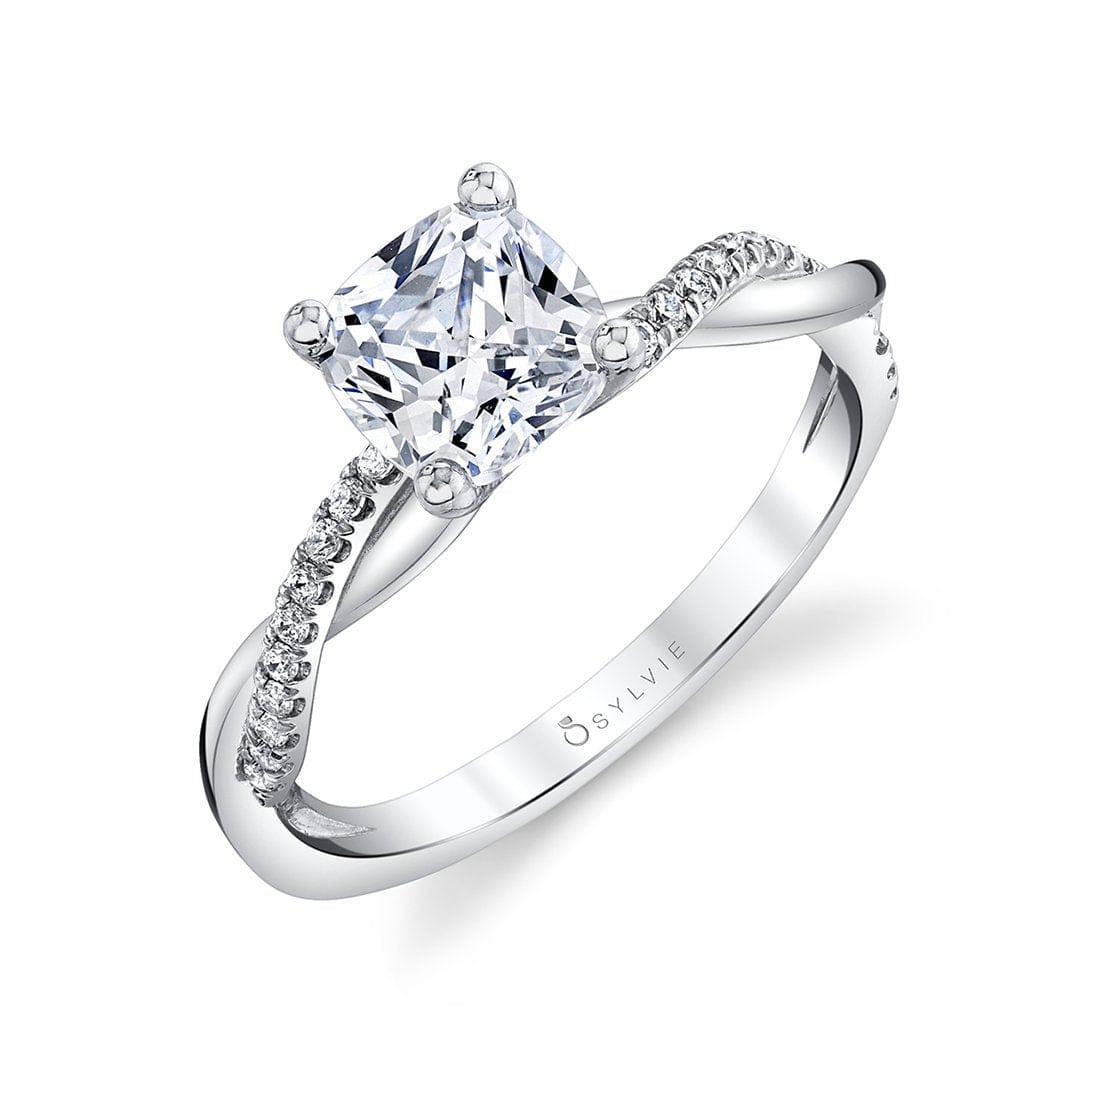 18K White Gold Diamond Twist Engagement Ring Setting